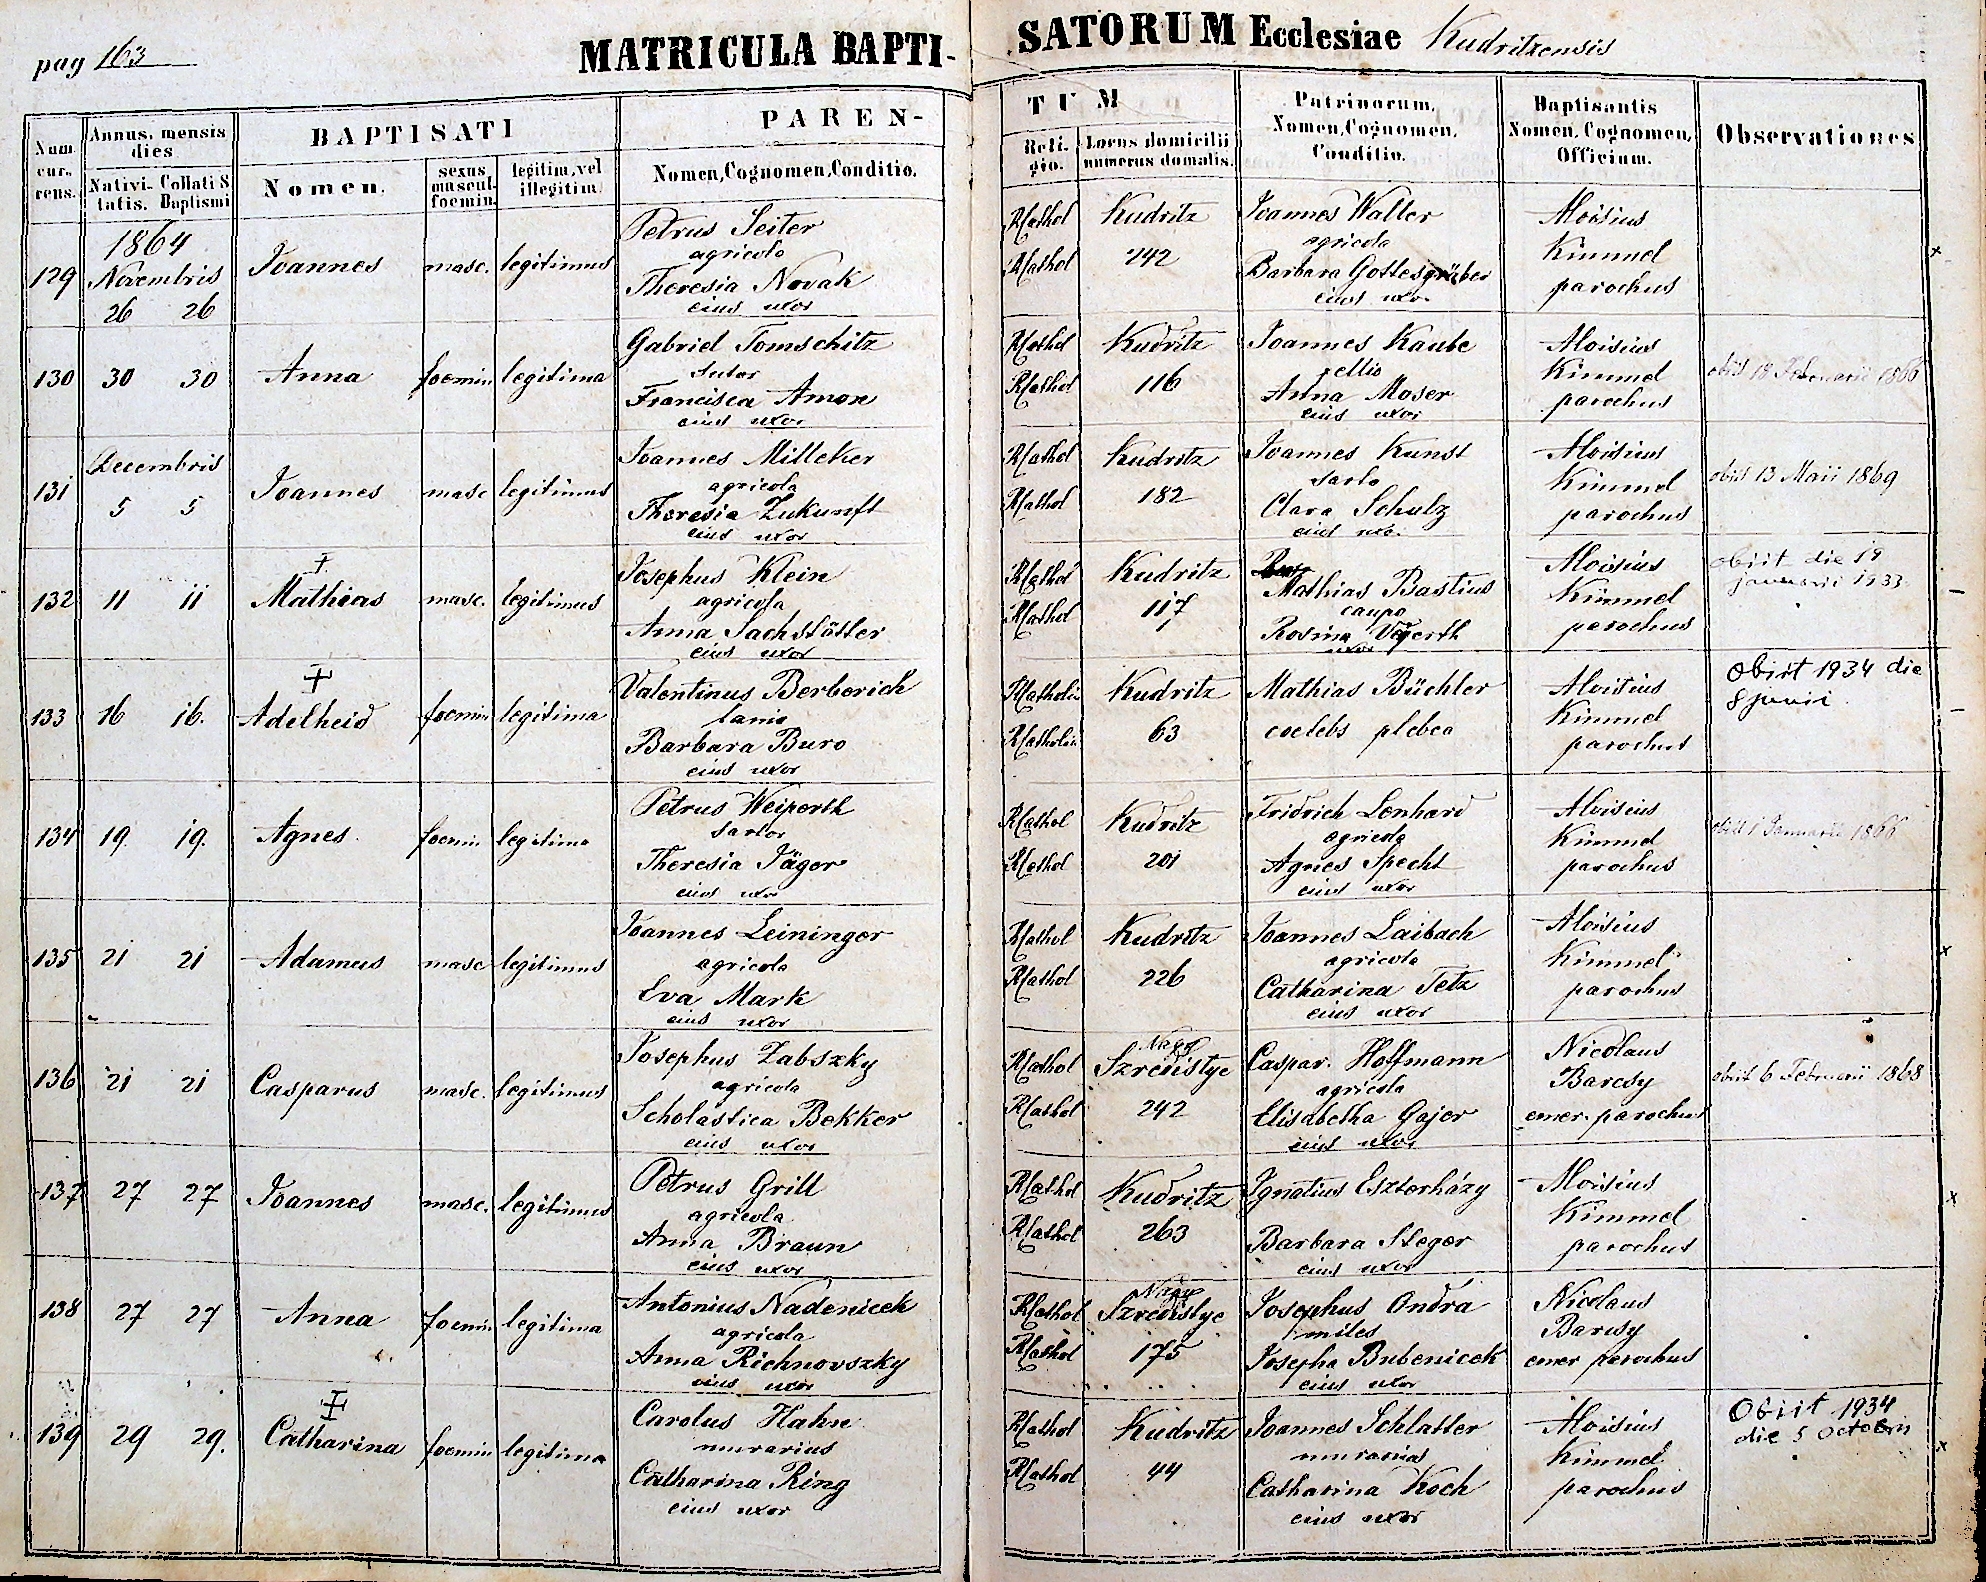 images/church_records/BIRTHS/1852-1870B/163